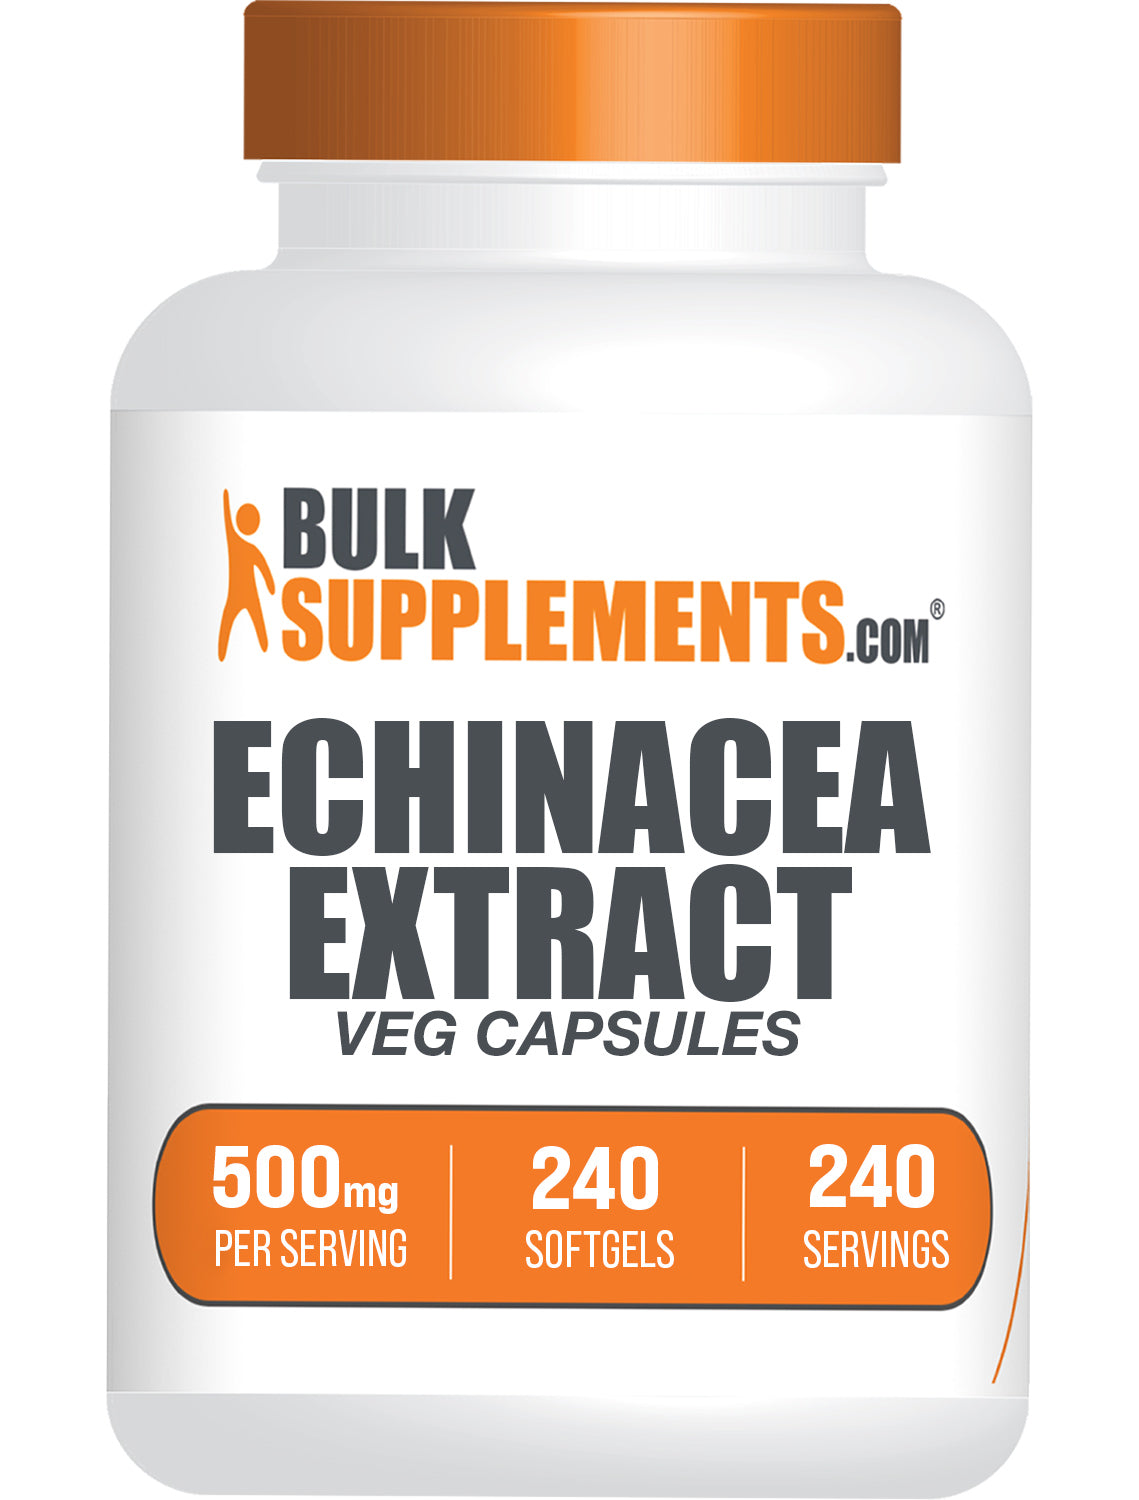 Echinacea Extract Capsules